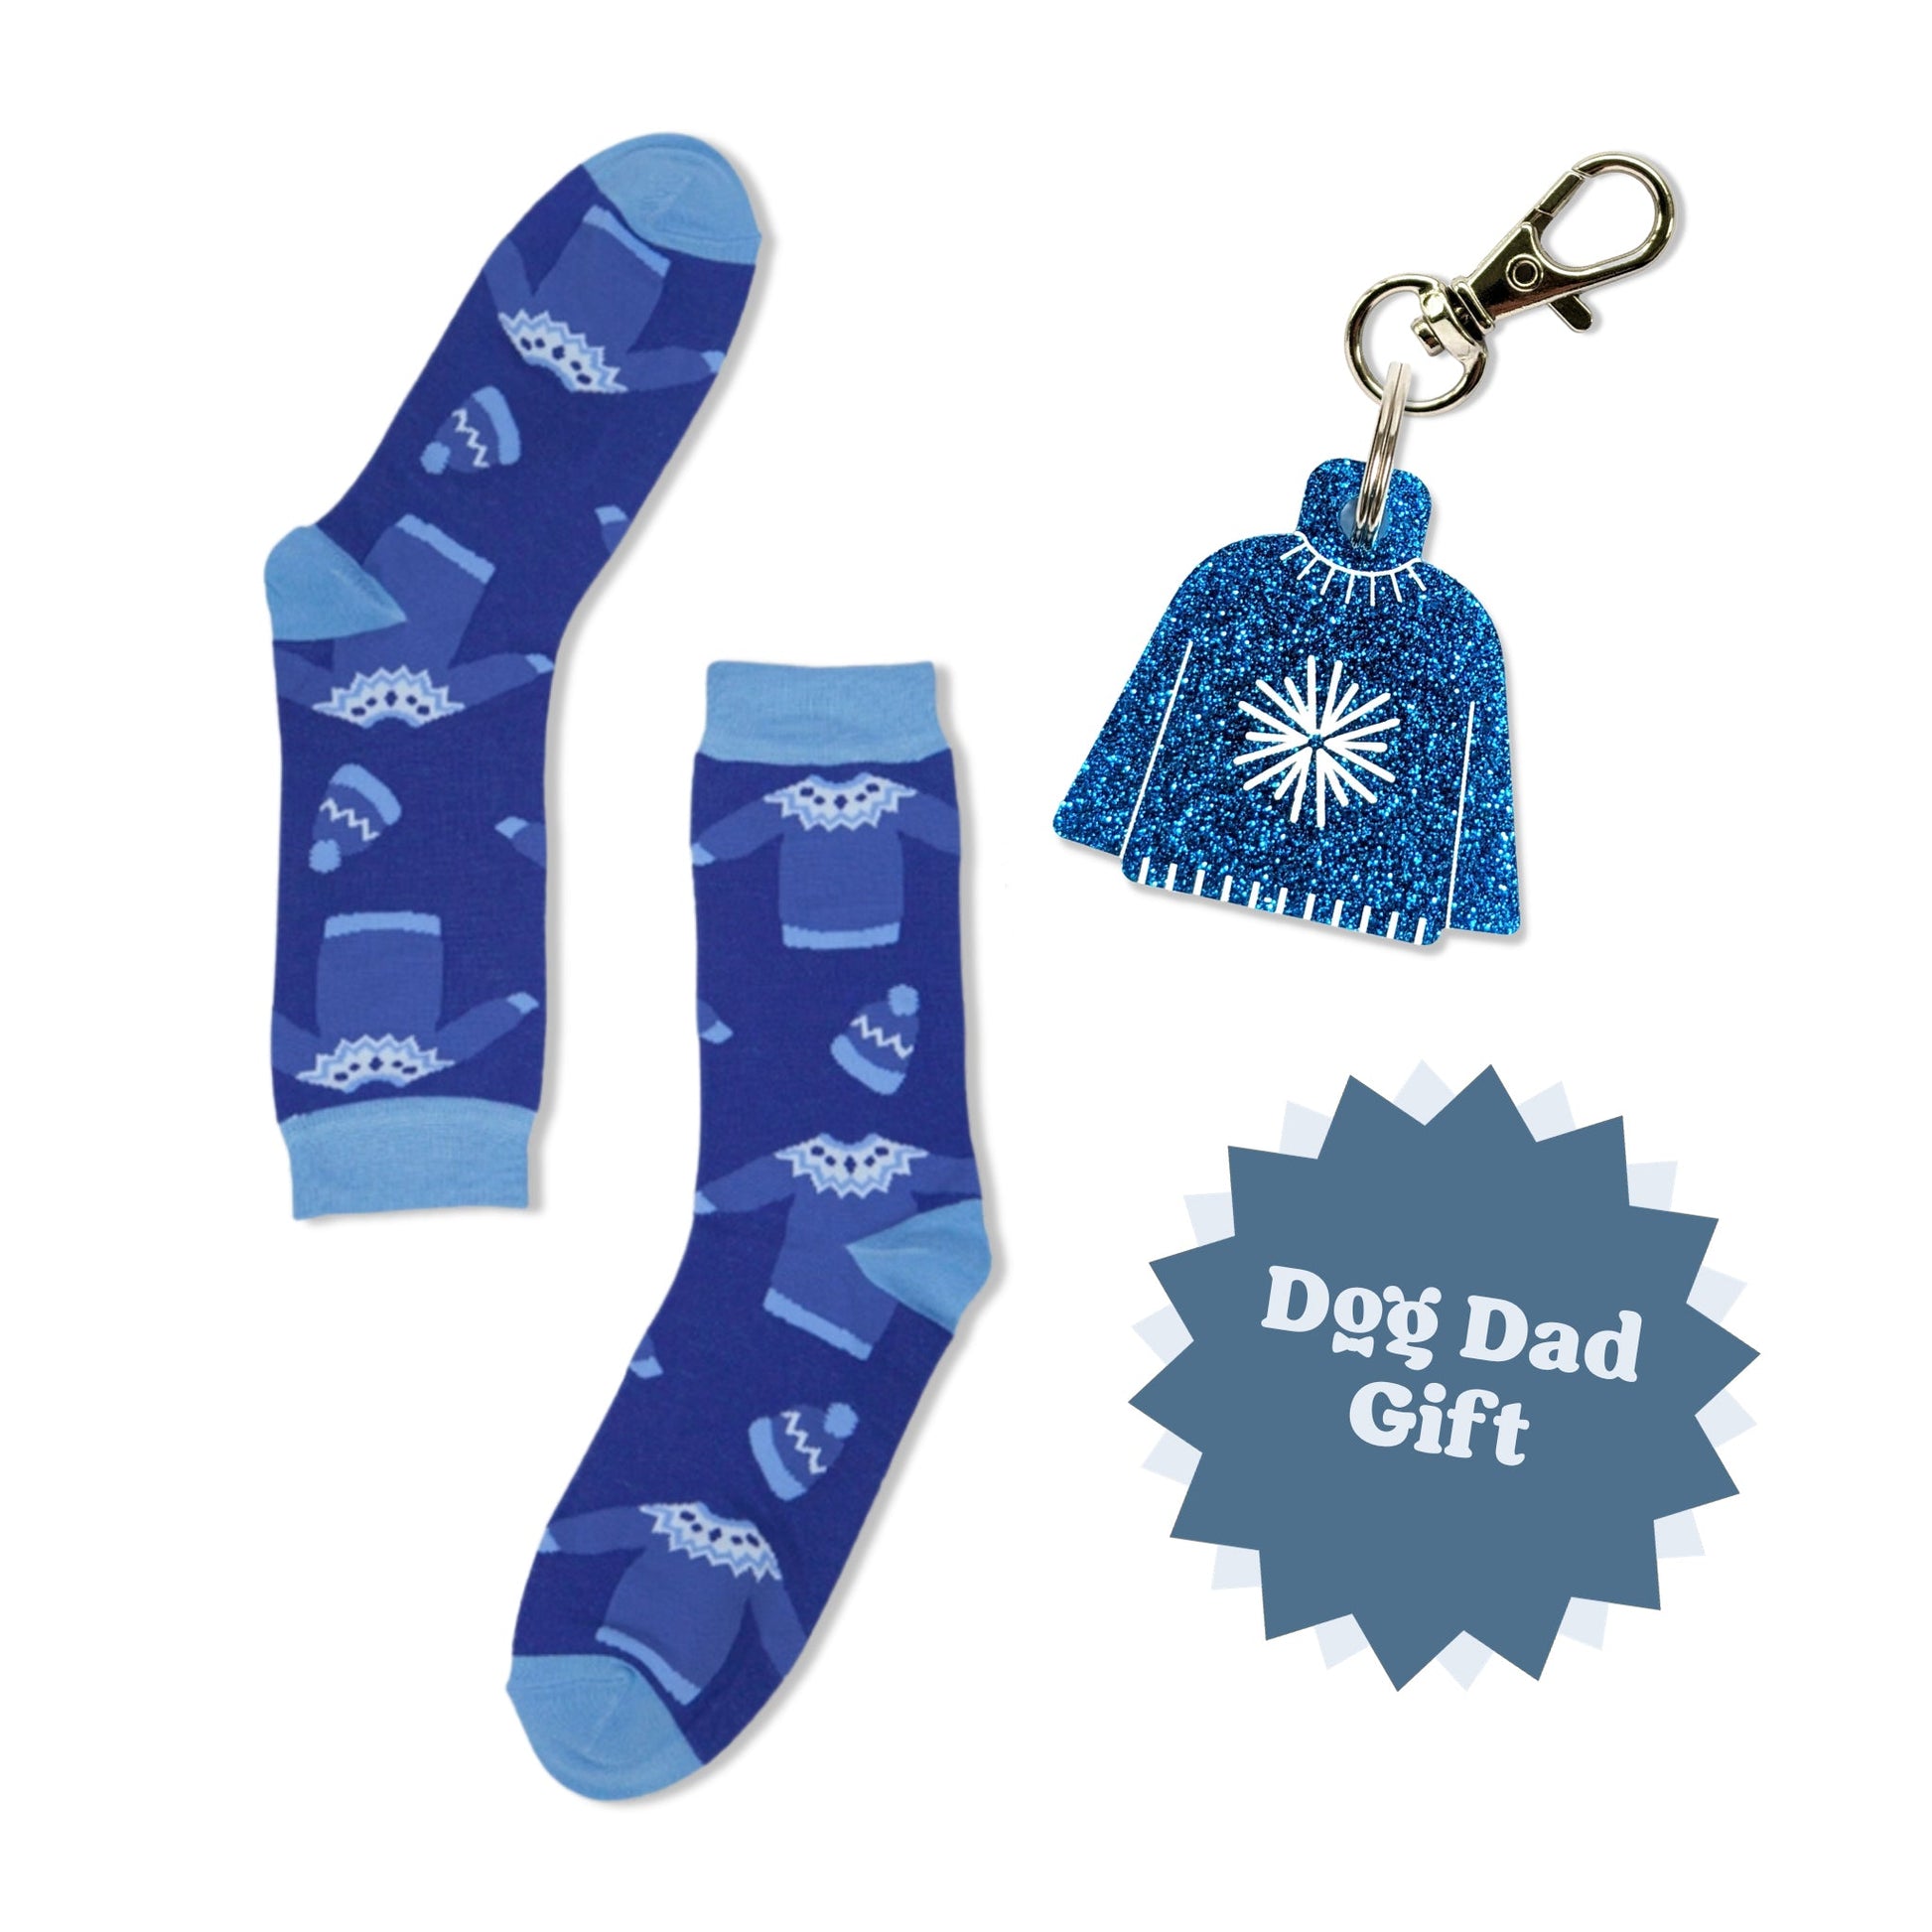 Wren & Rye Blue Jumper Gift Set - Dog Dad